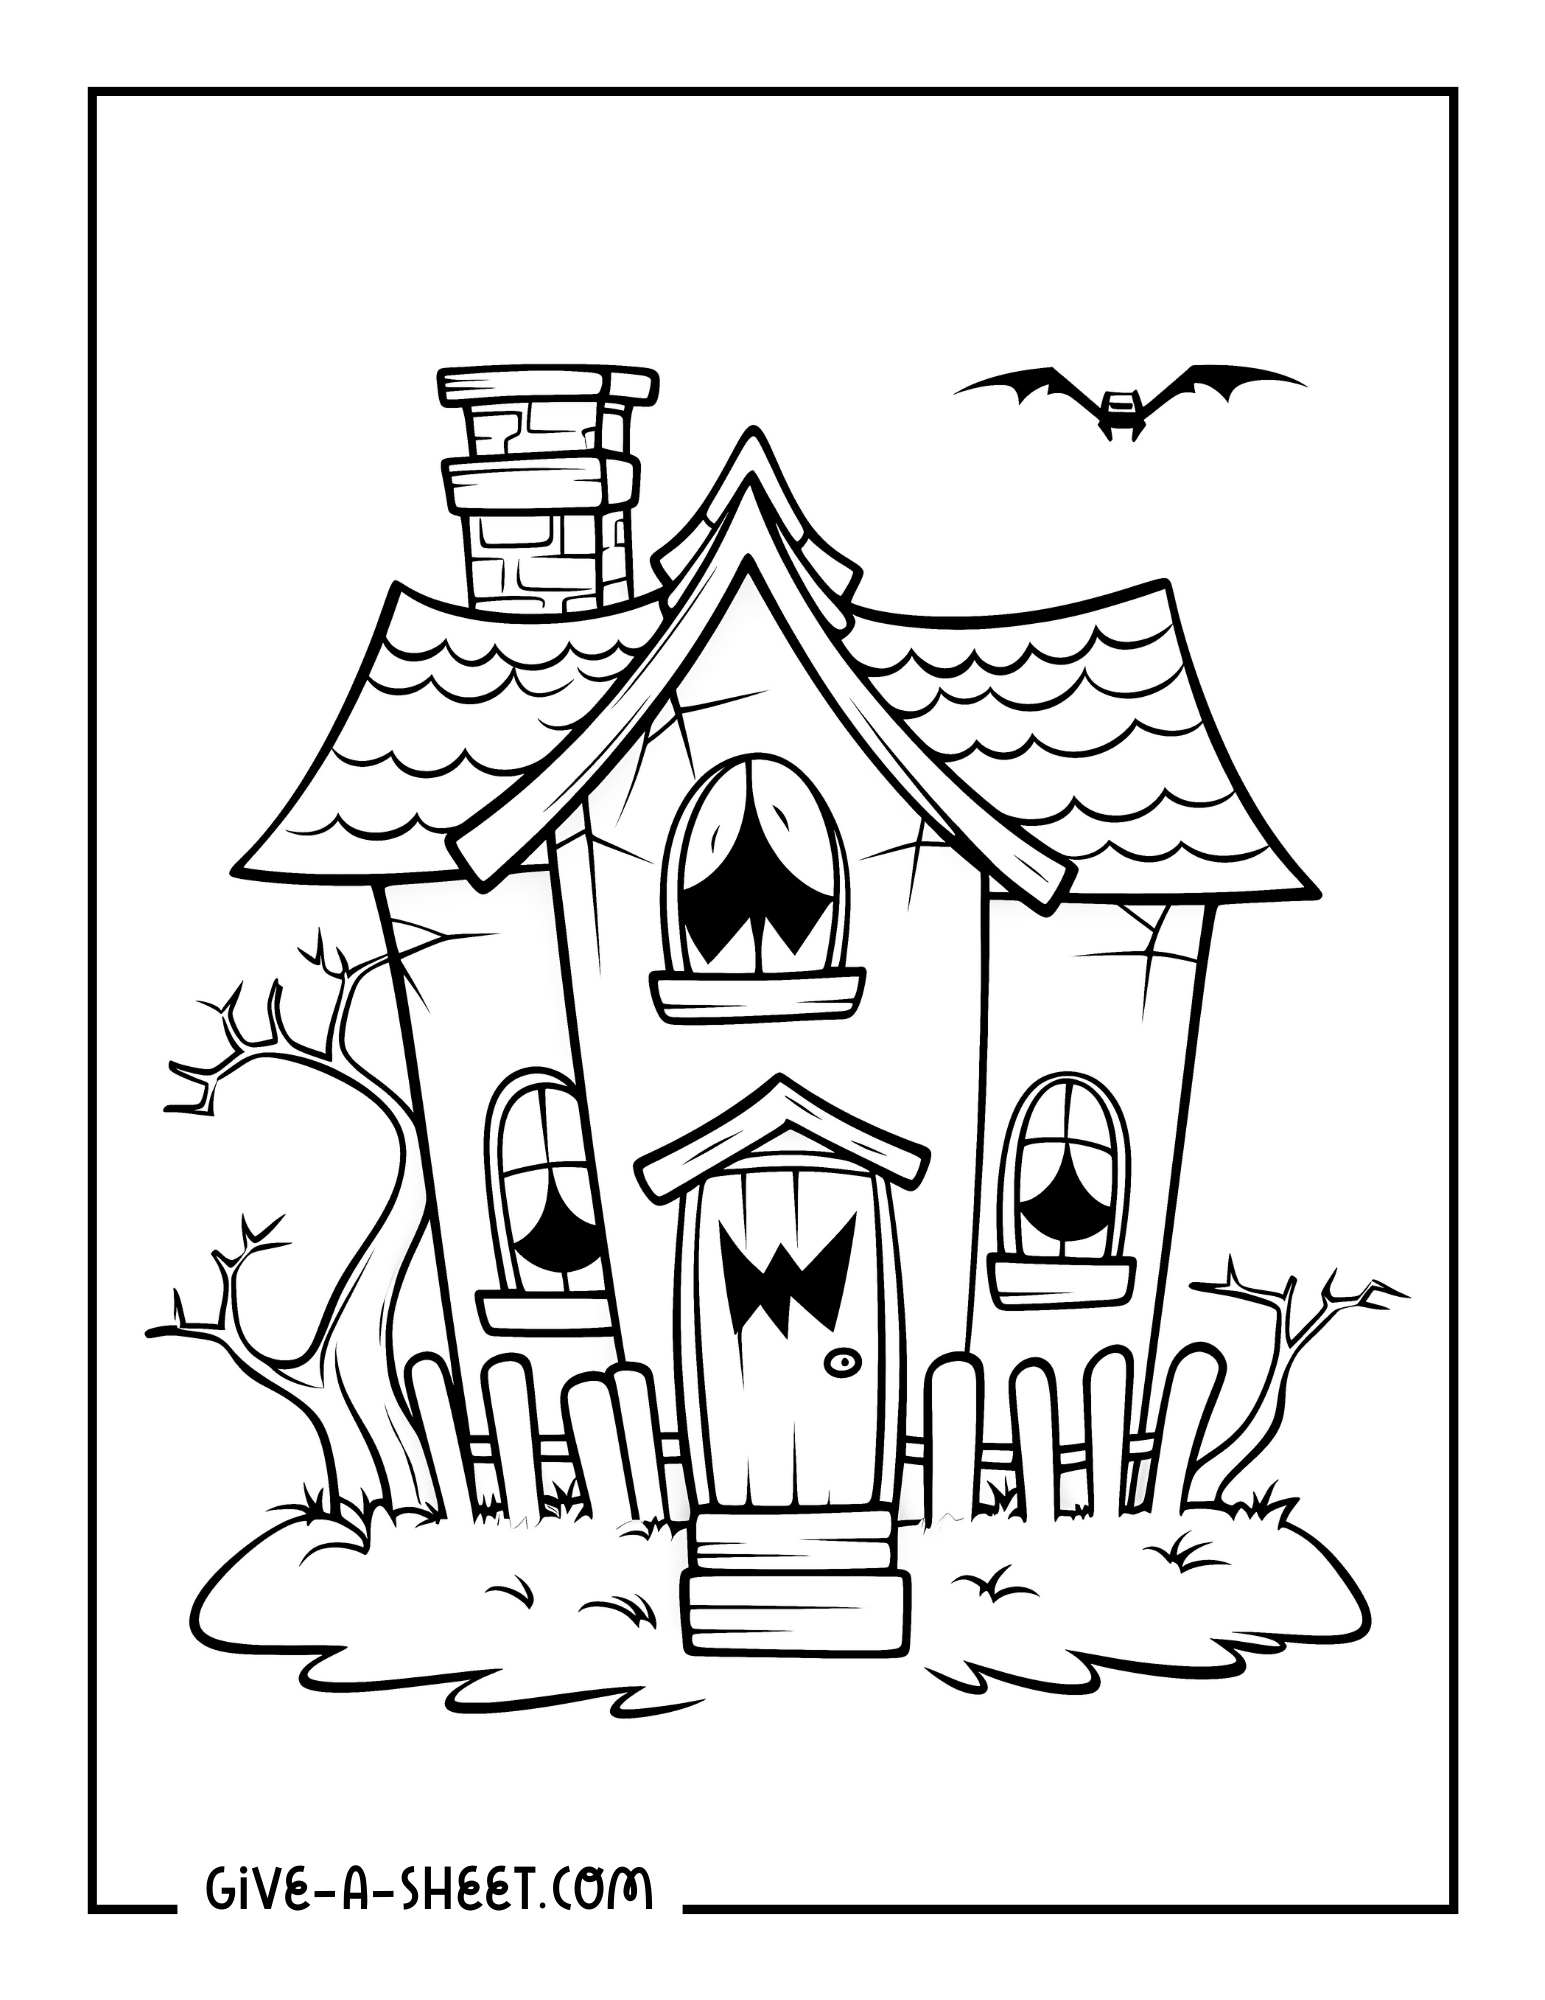 Monster house coloring sheet for kids.